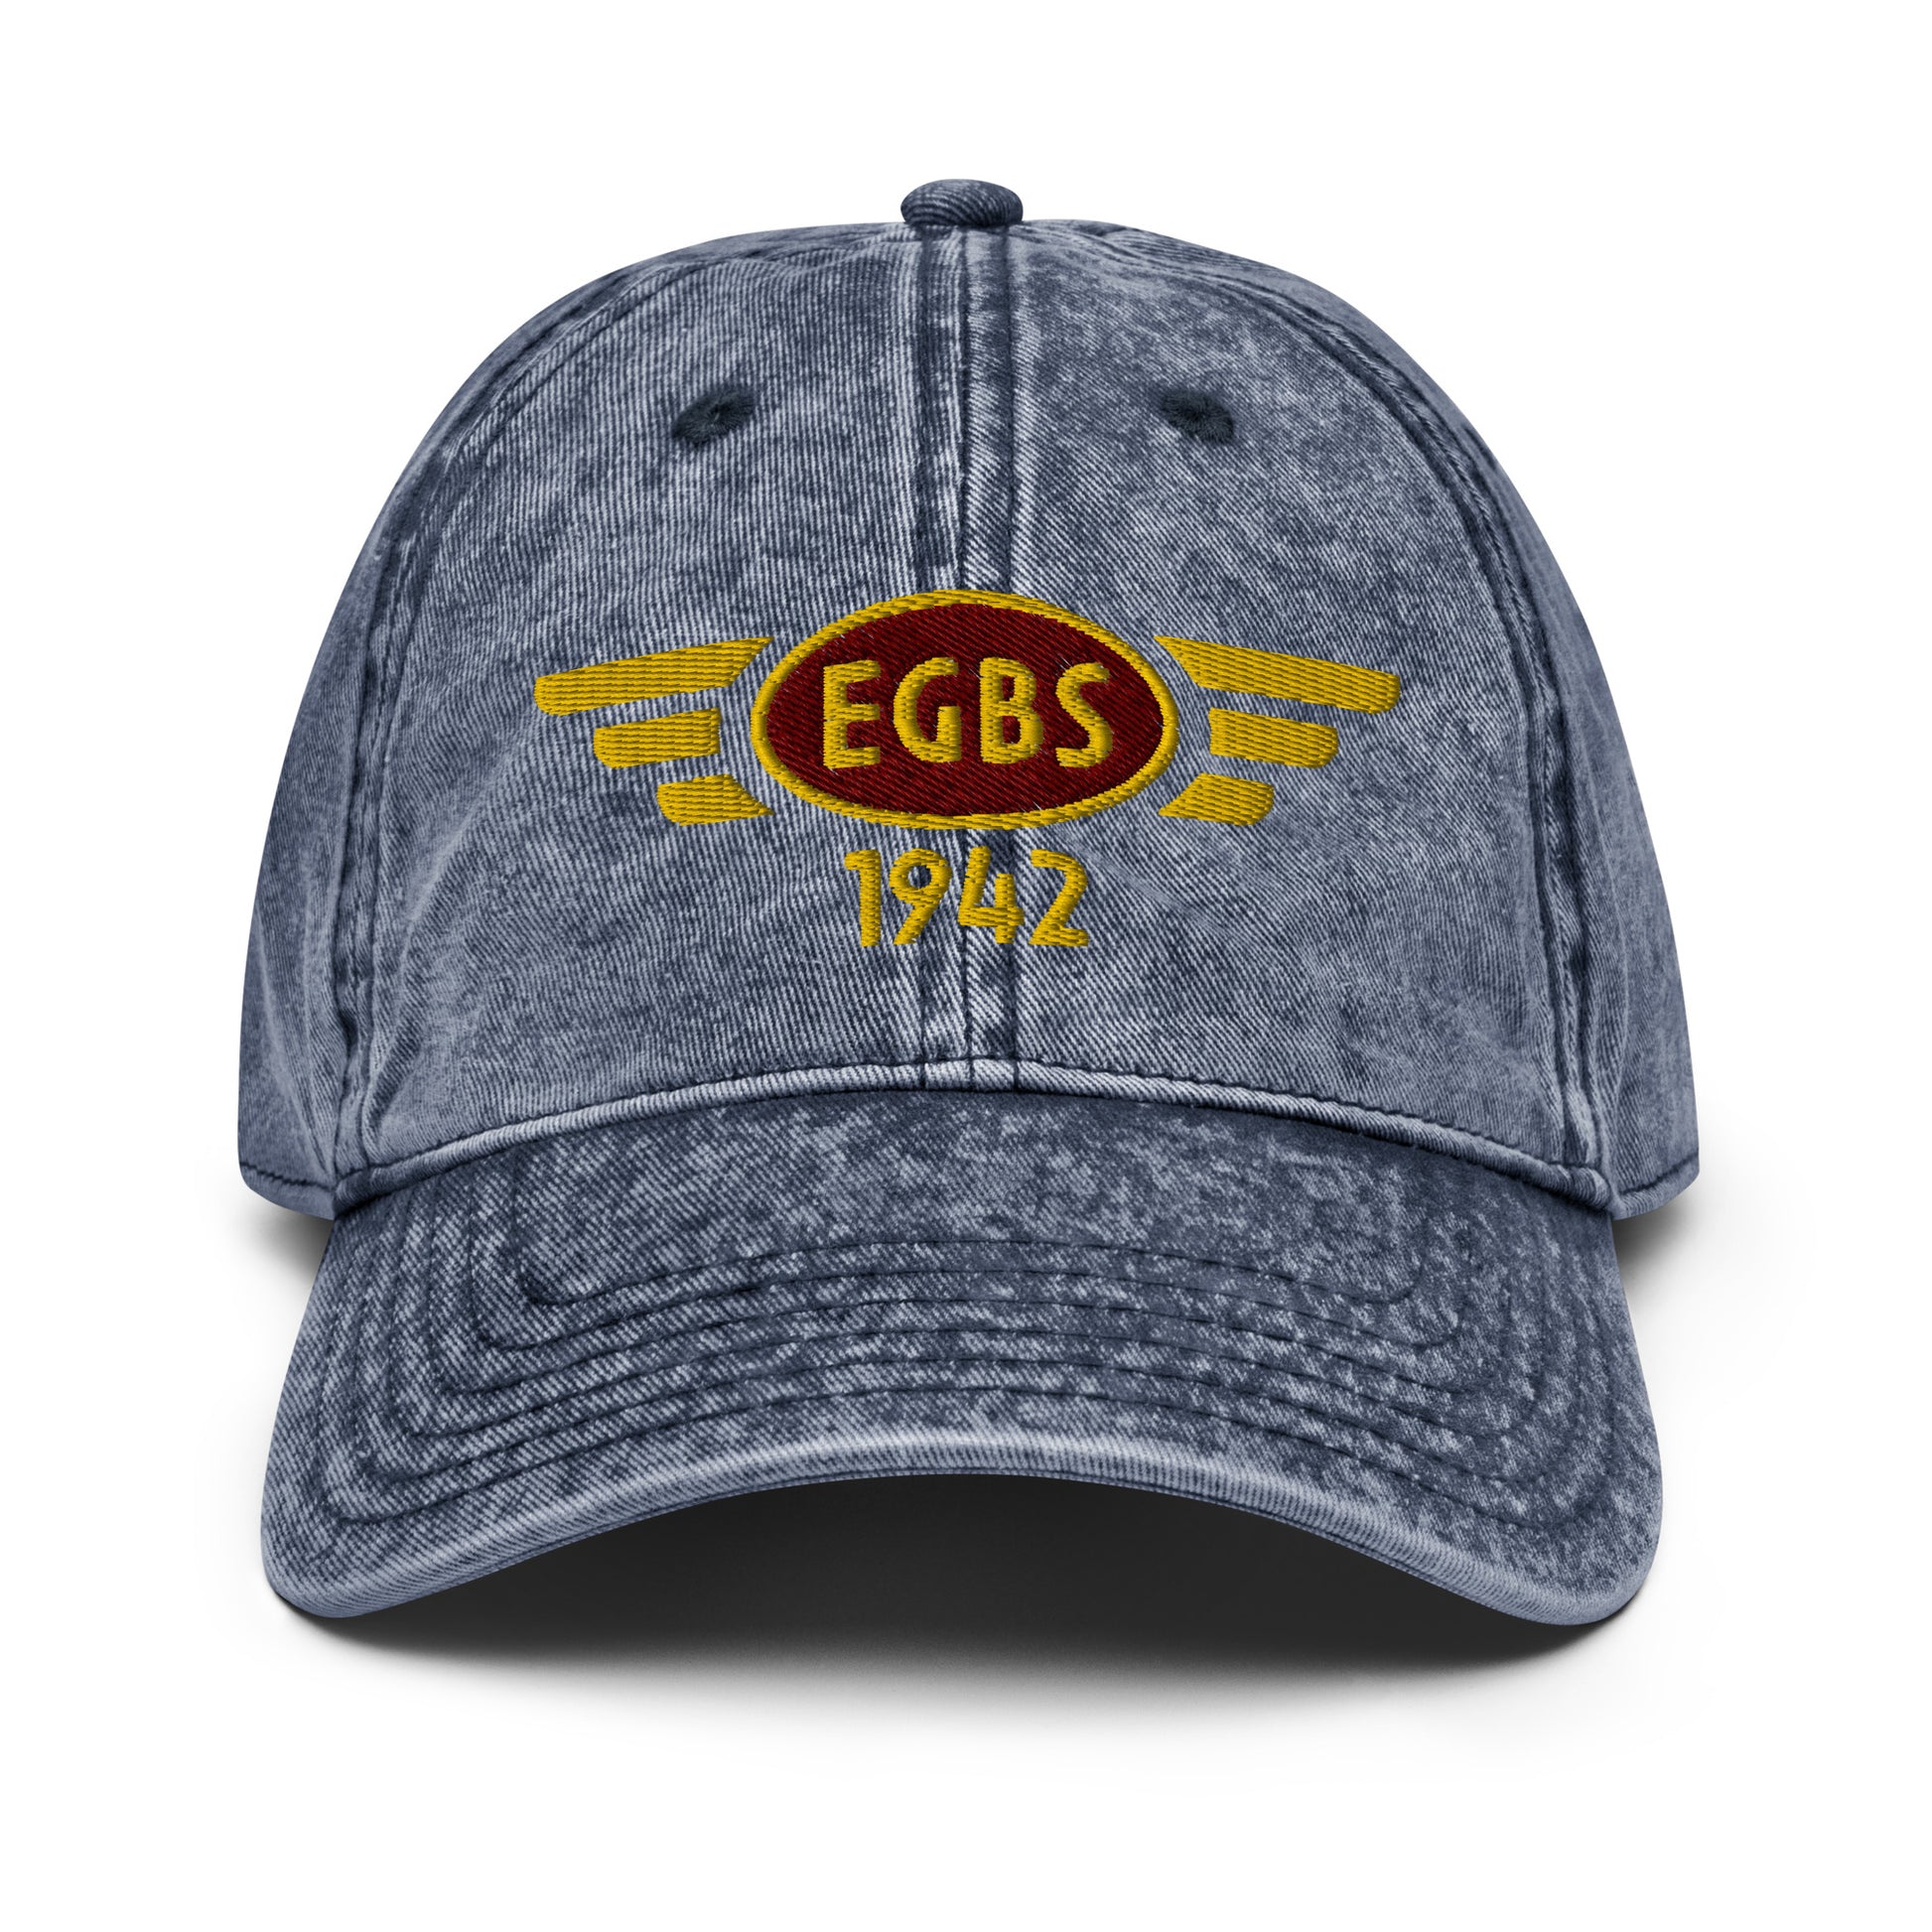 Blue cotton twill baseball cap with embroidered vintage style aviation logo for Shobdon Aerodrome.